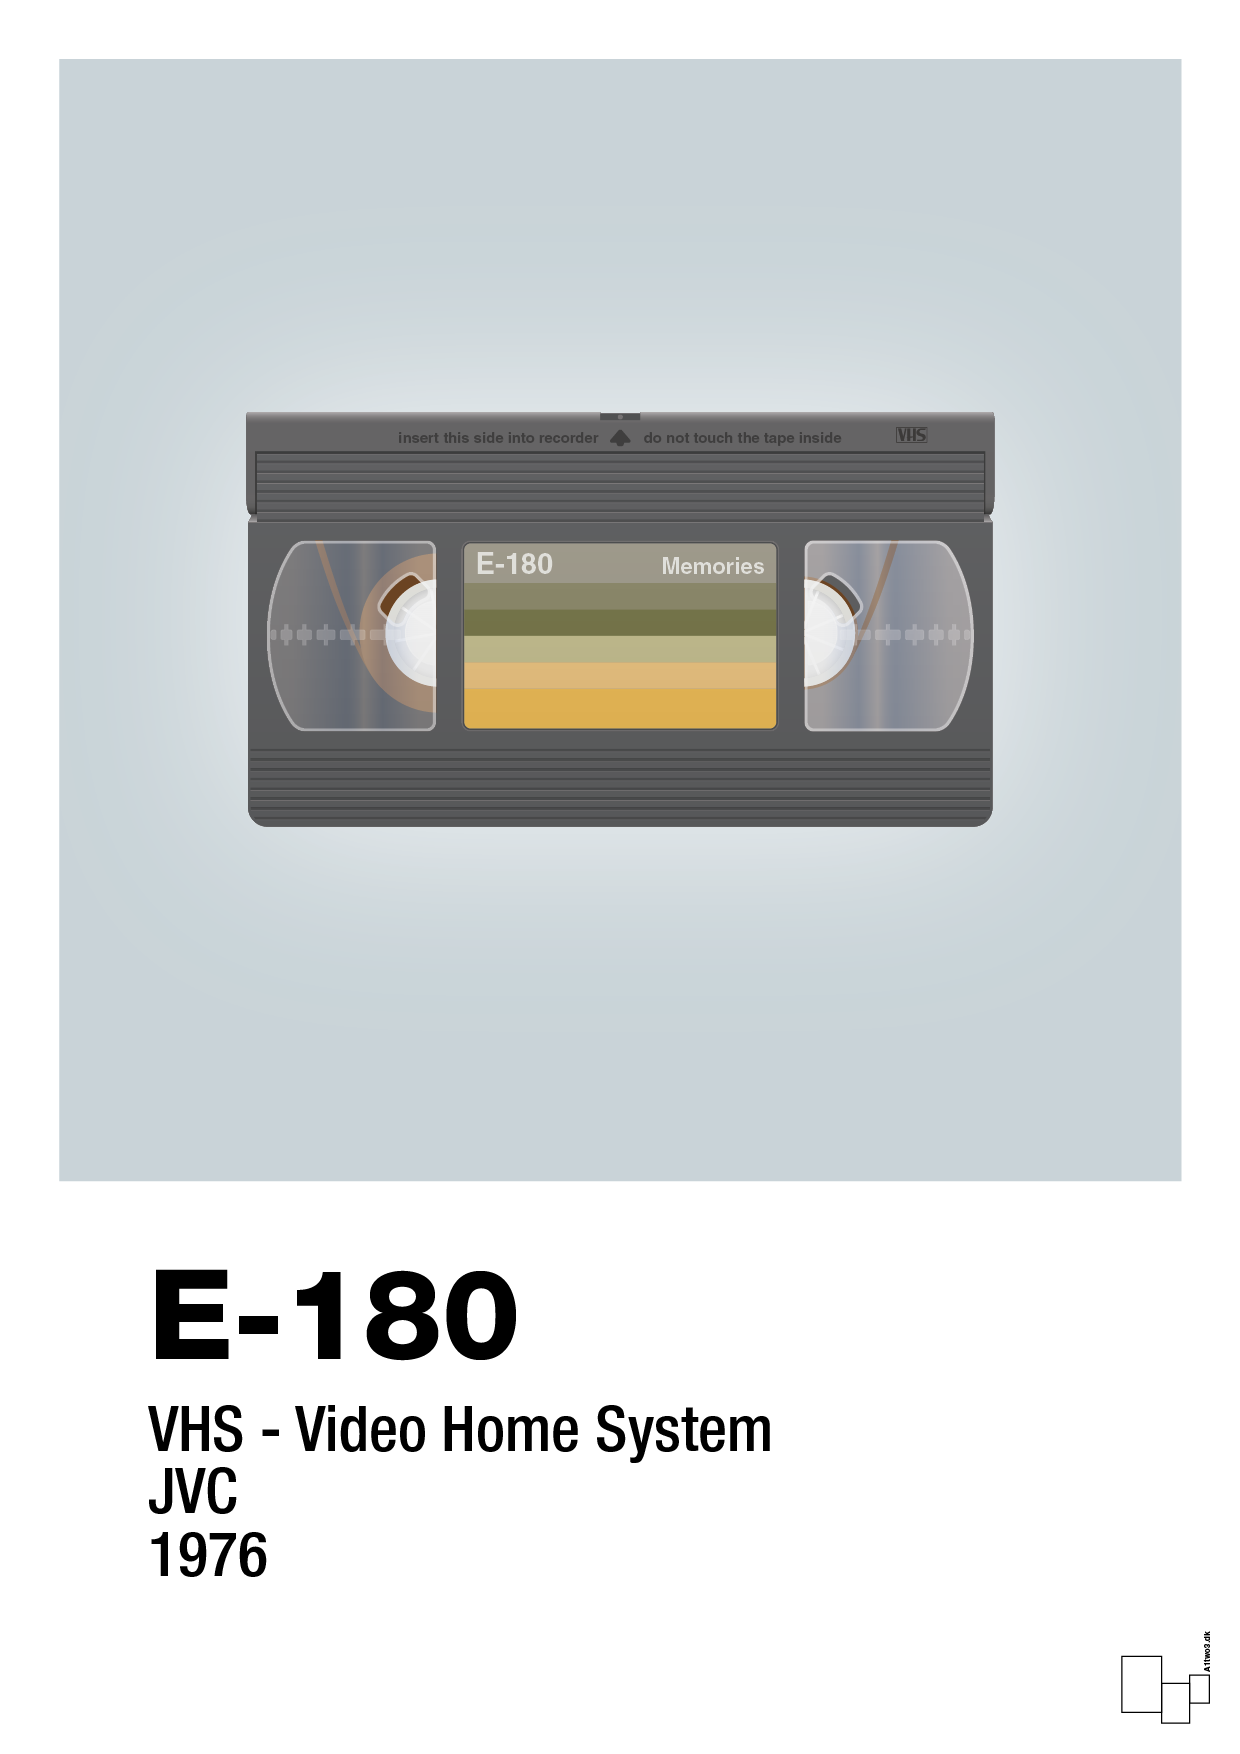 videobånd e-180 - Plakat med Grafik i Light Drizzle